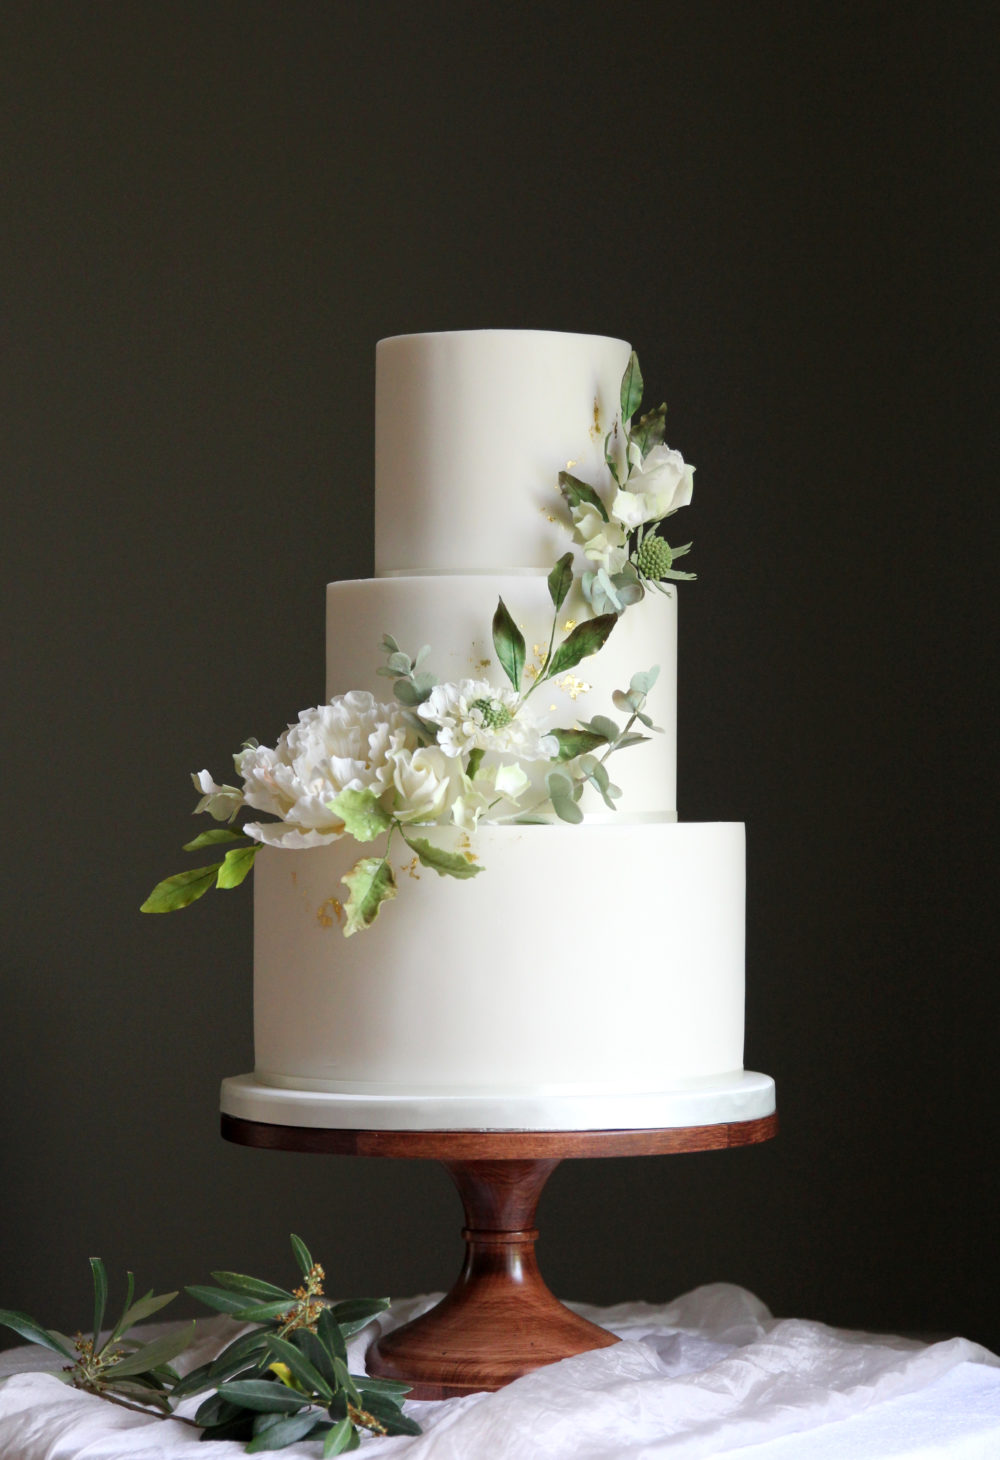 Summer White Wedding Cake Cove Cake Design